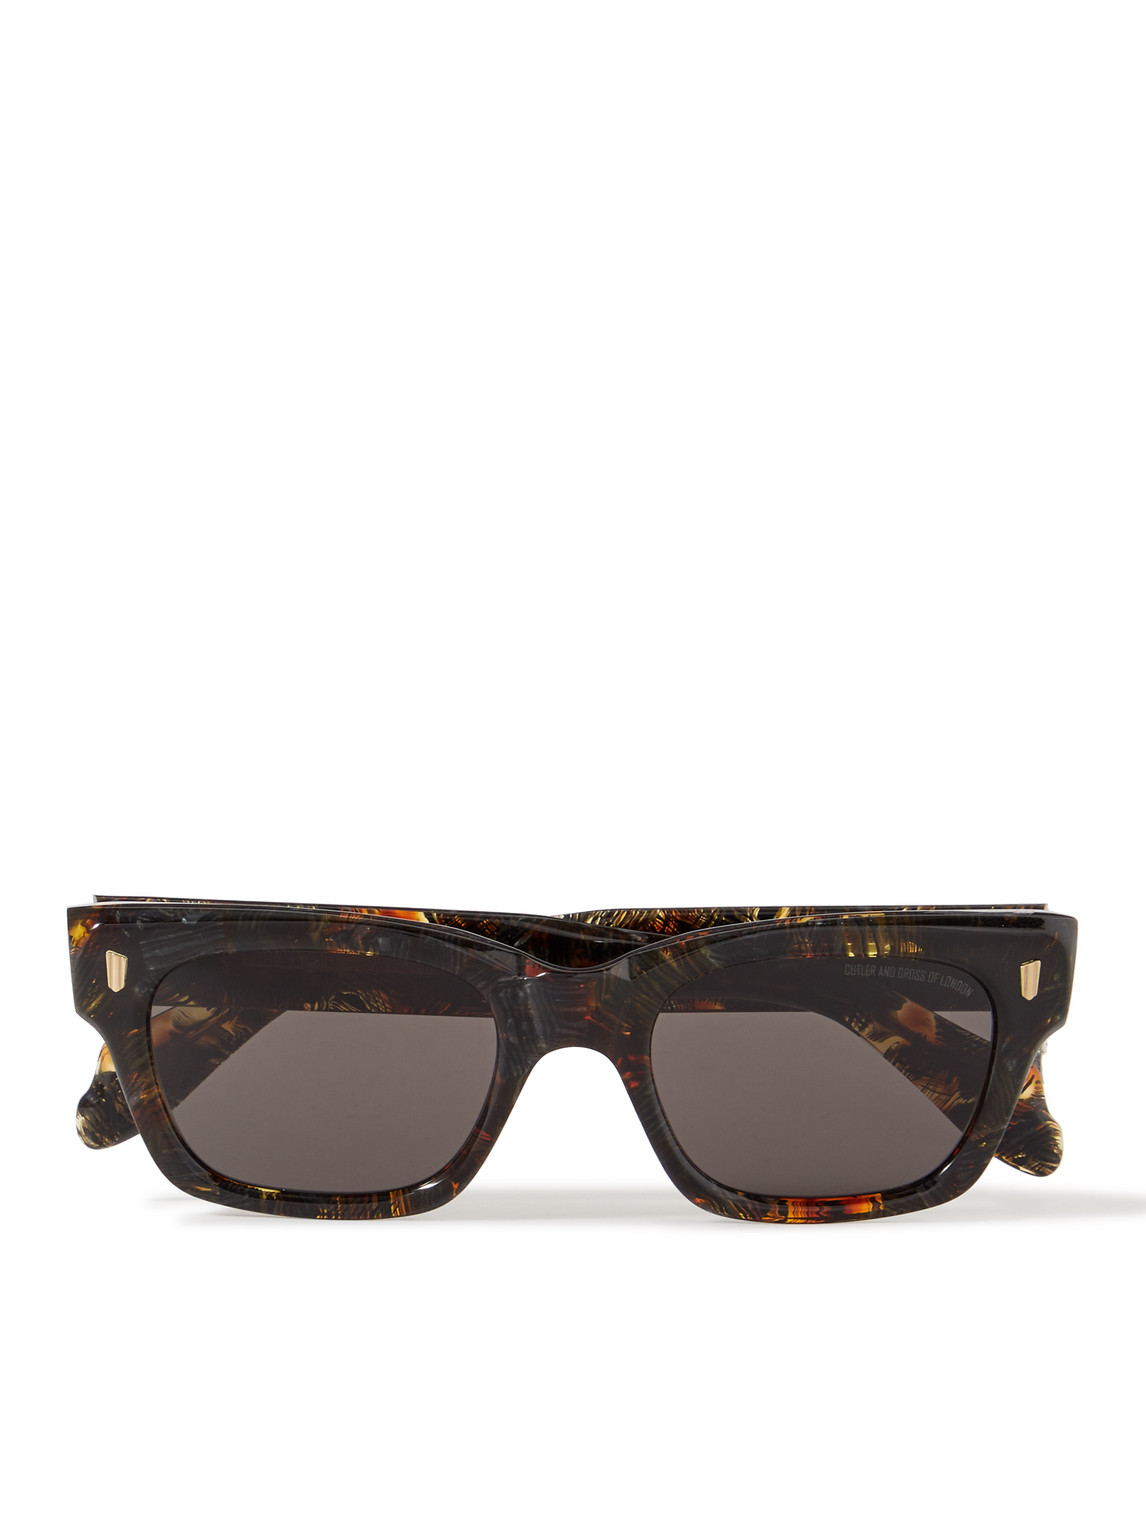 Cutler and Gross - 1391 Square-Frame Tortoiseshell Acetate Sunglasses - Men - Black von Cutler and Gross